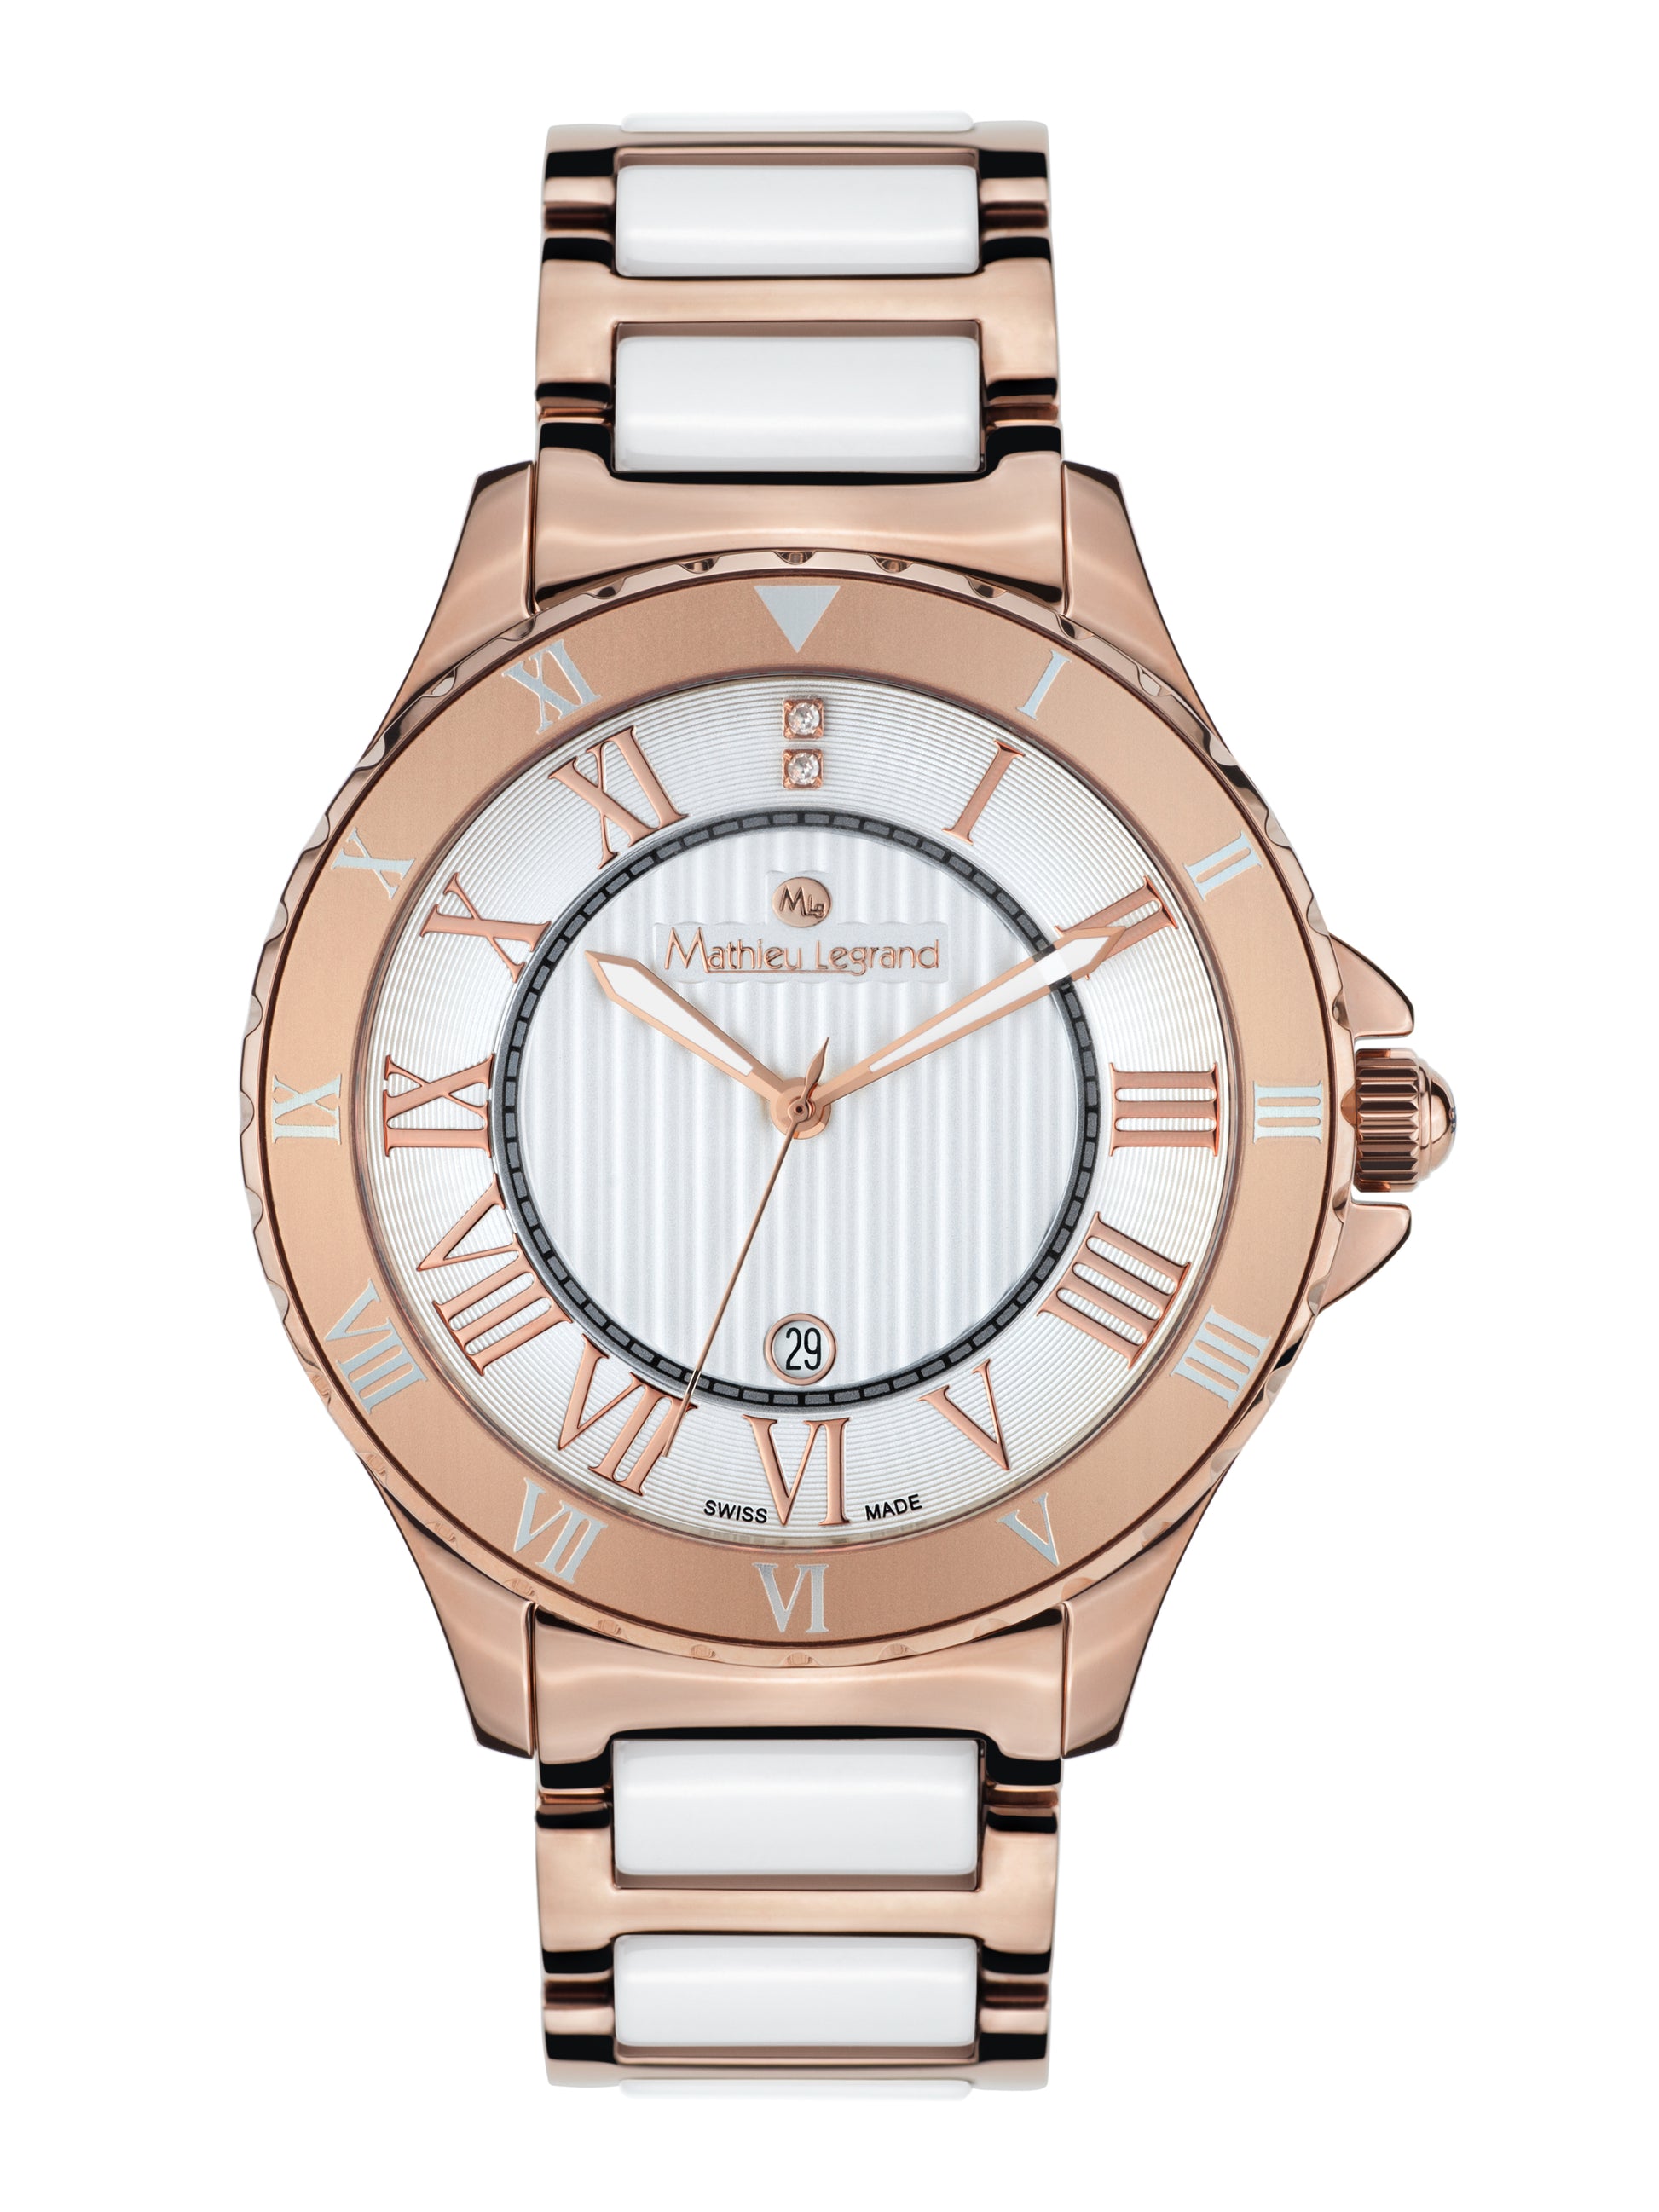 Automatic watches — Tapisserie — Mathieu Legrand — rosegold IP ceramic white